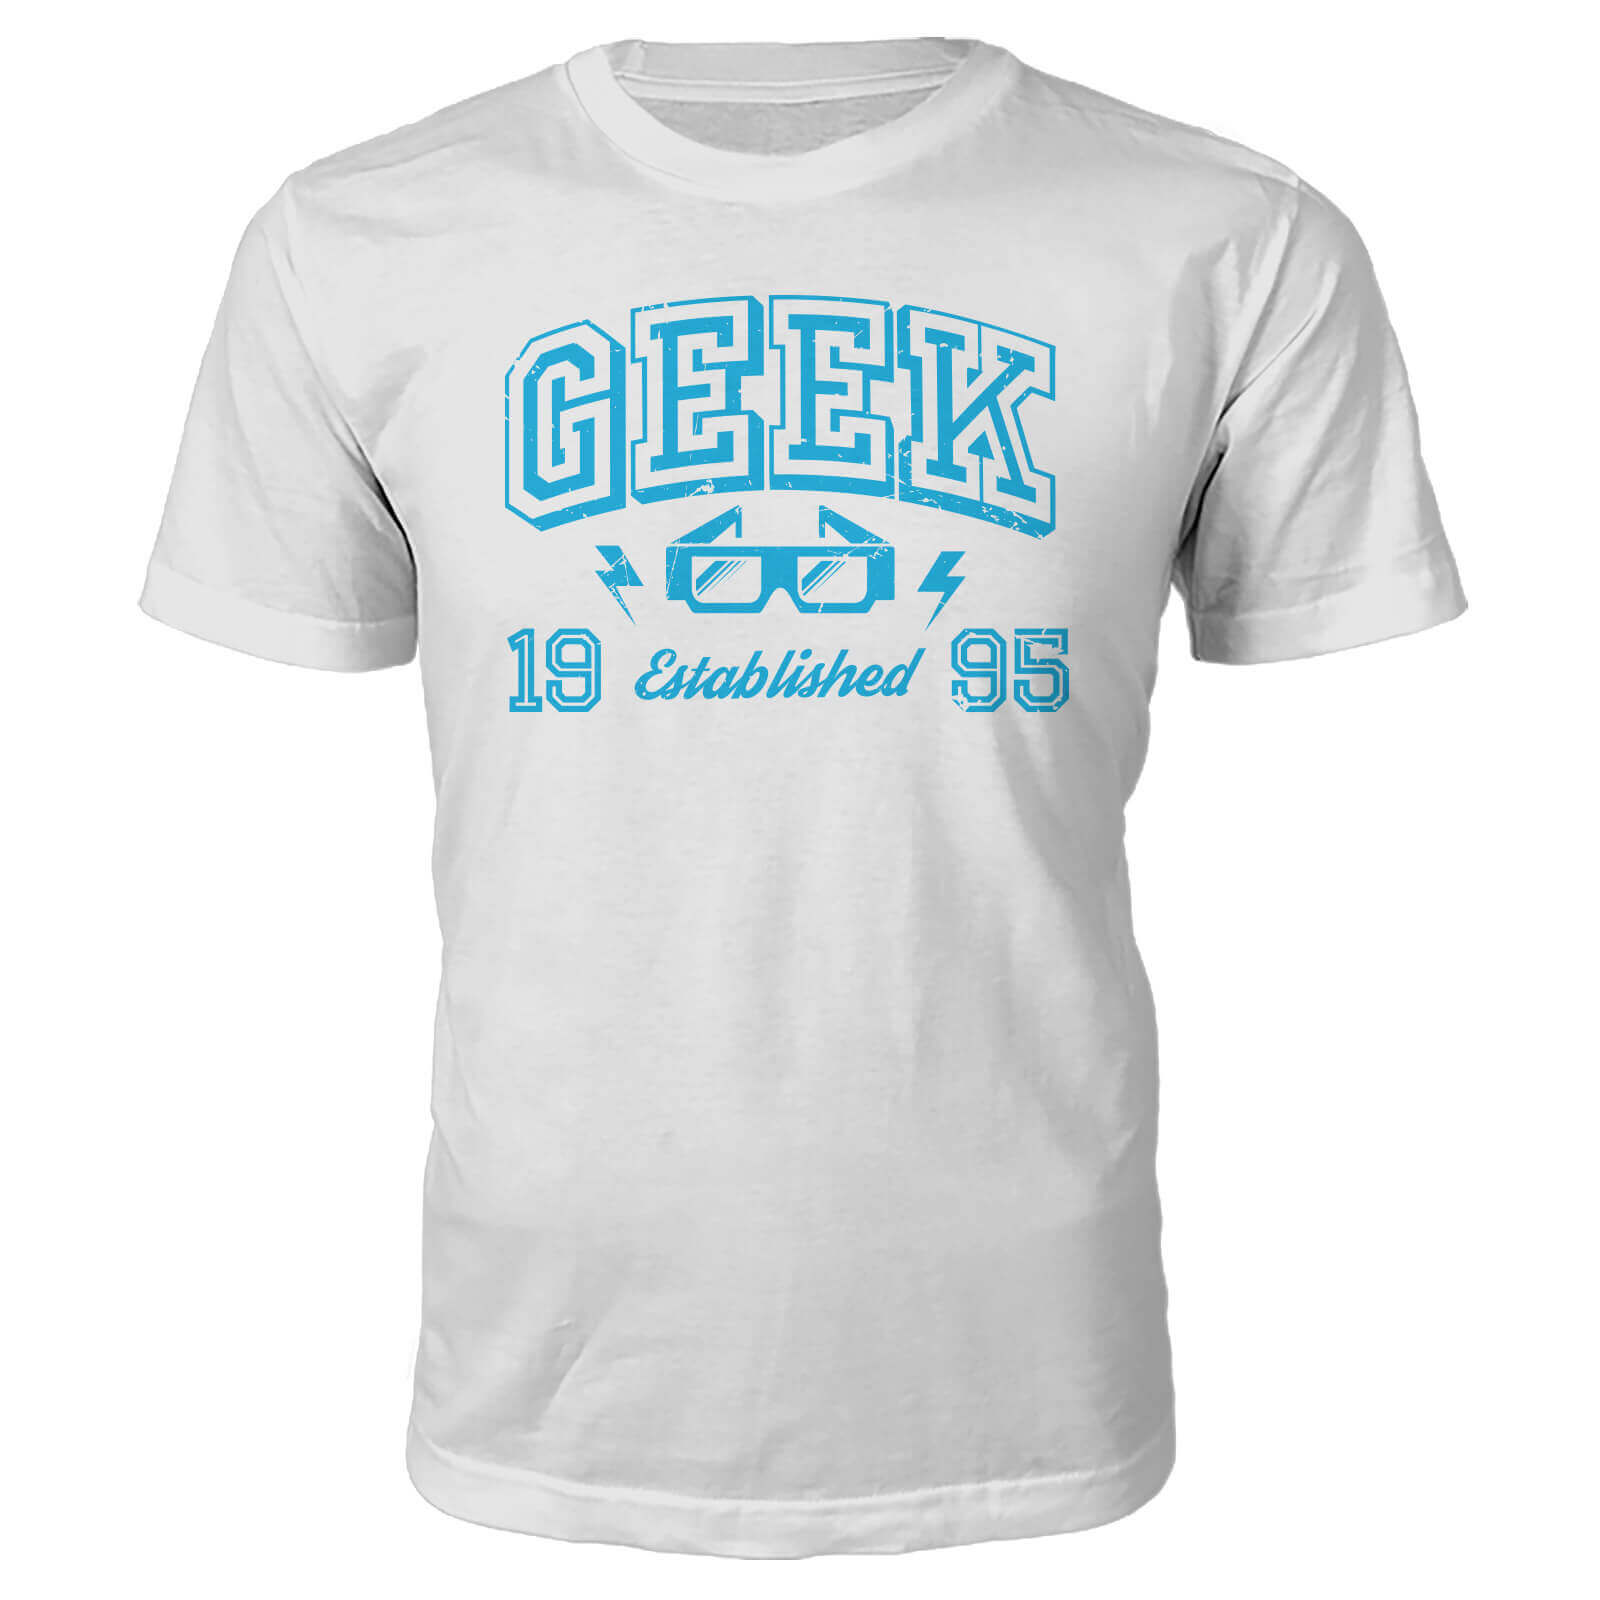 Geek Established 1990's T-Shirt- White - S - 1995